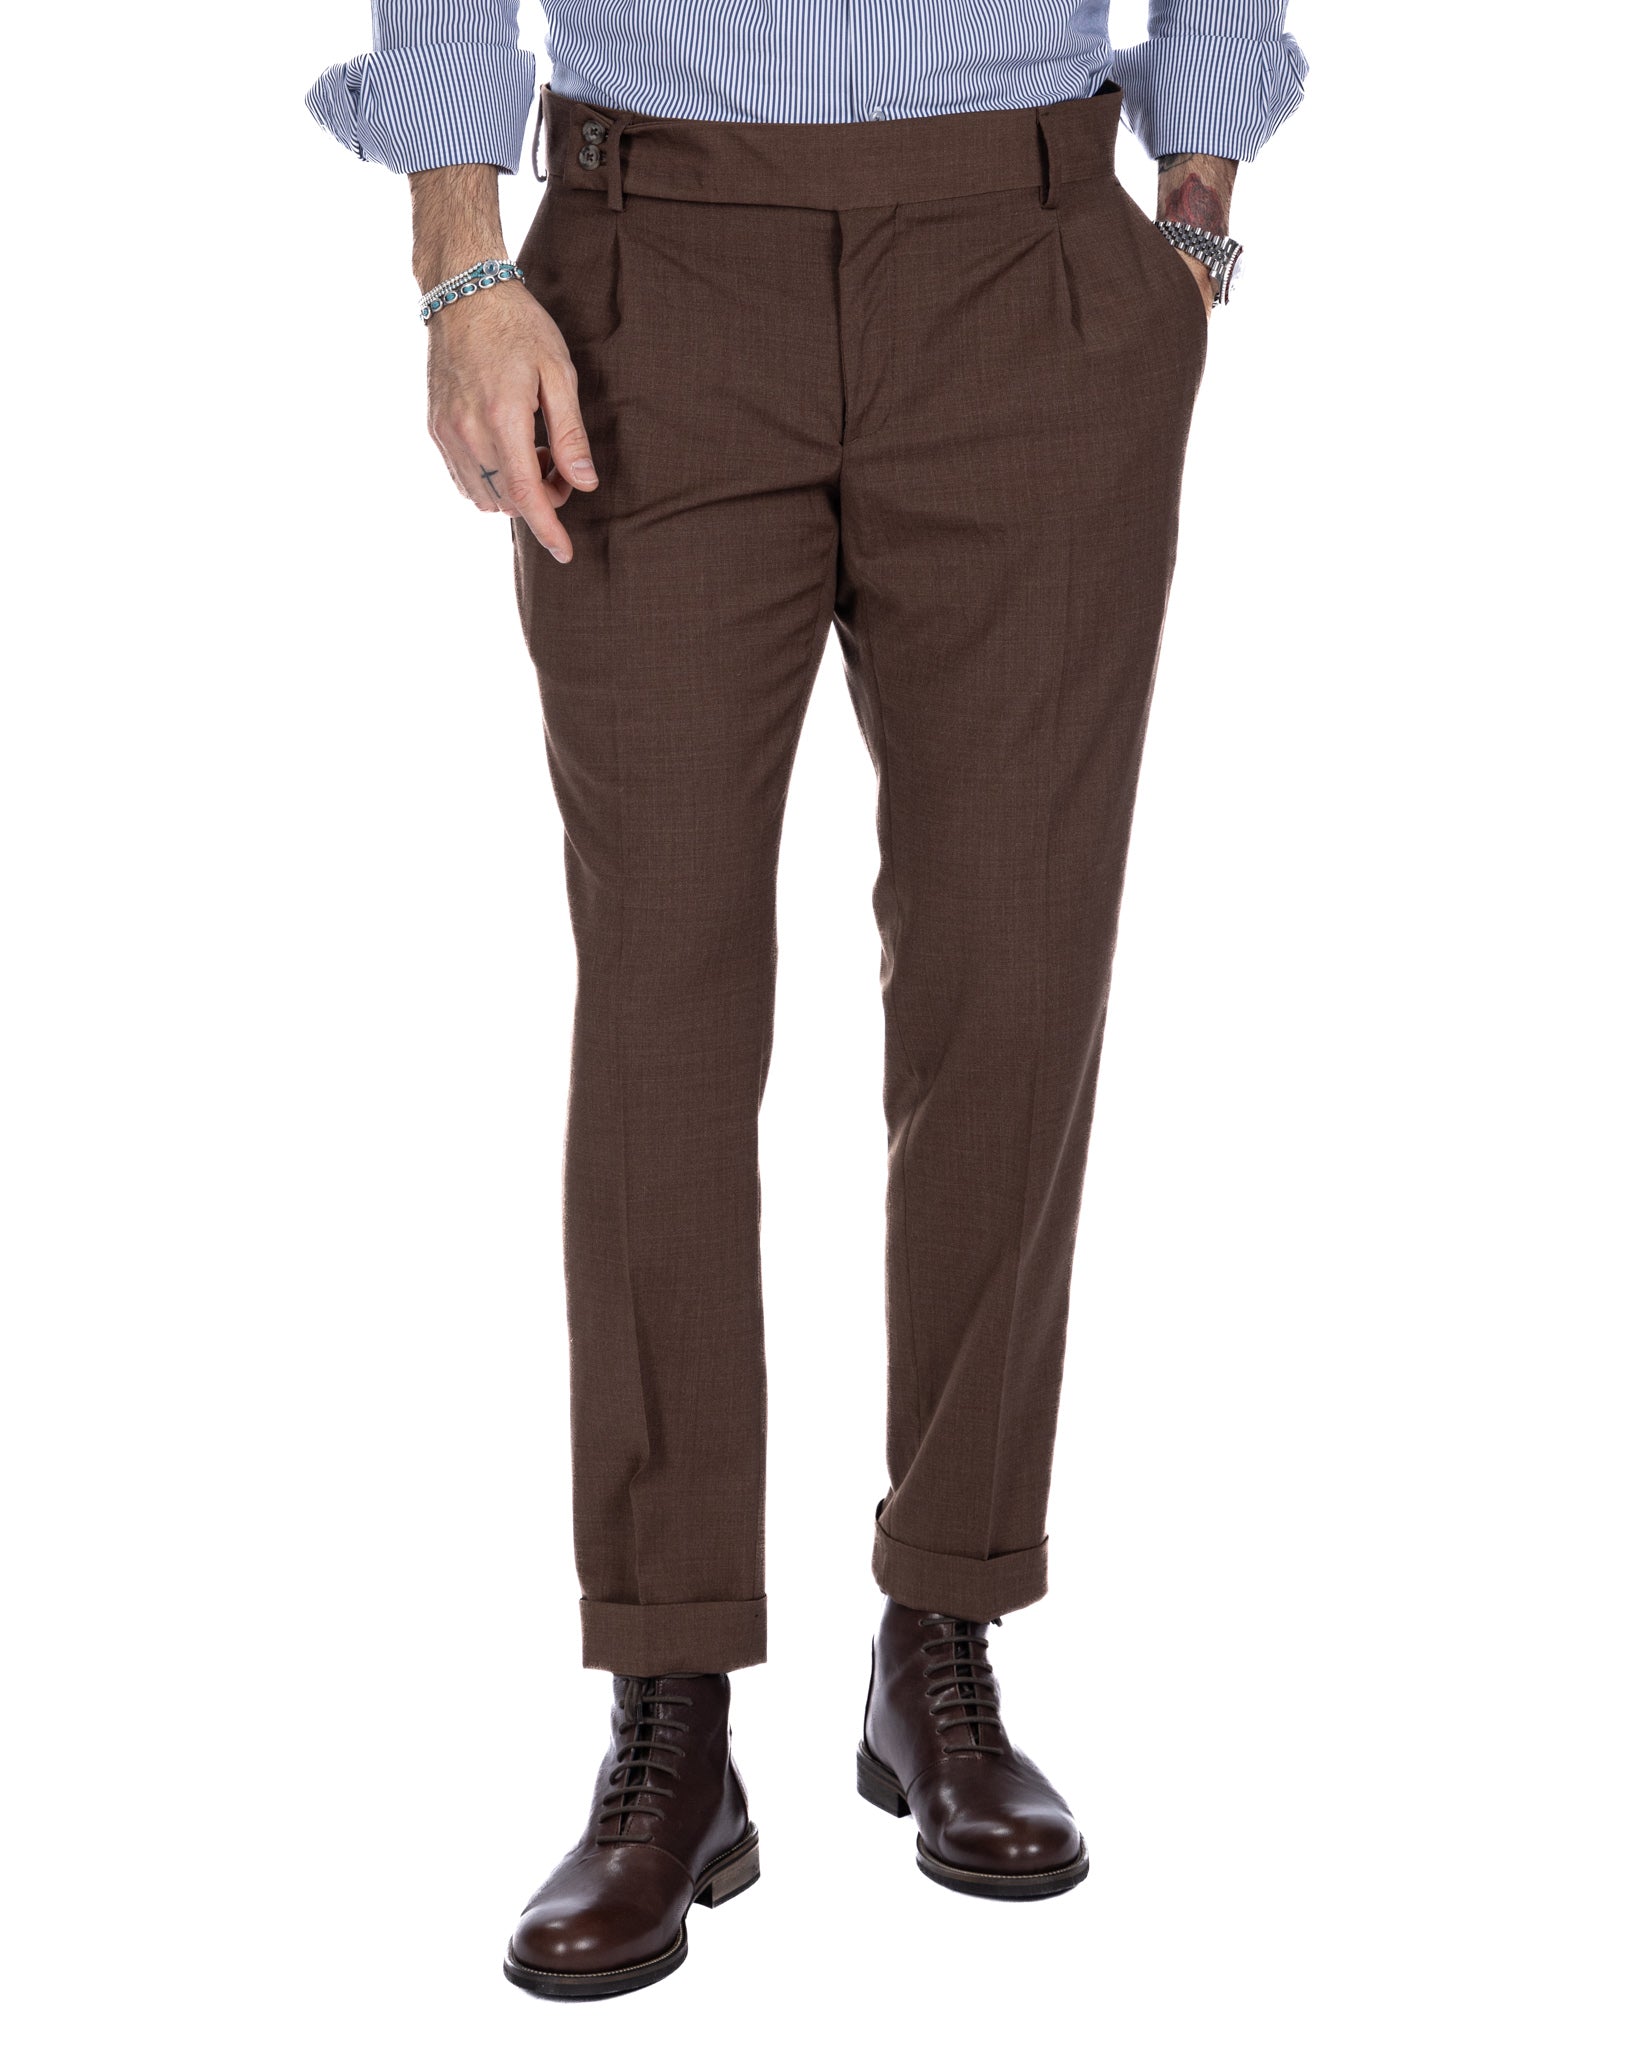 Italian - dark brown high-waisted trousers in wool blend